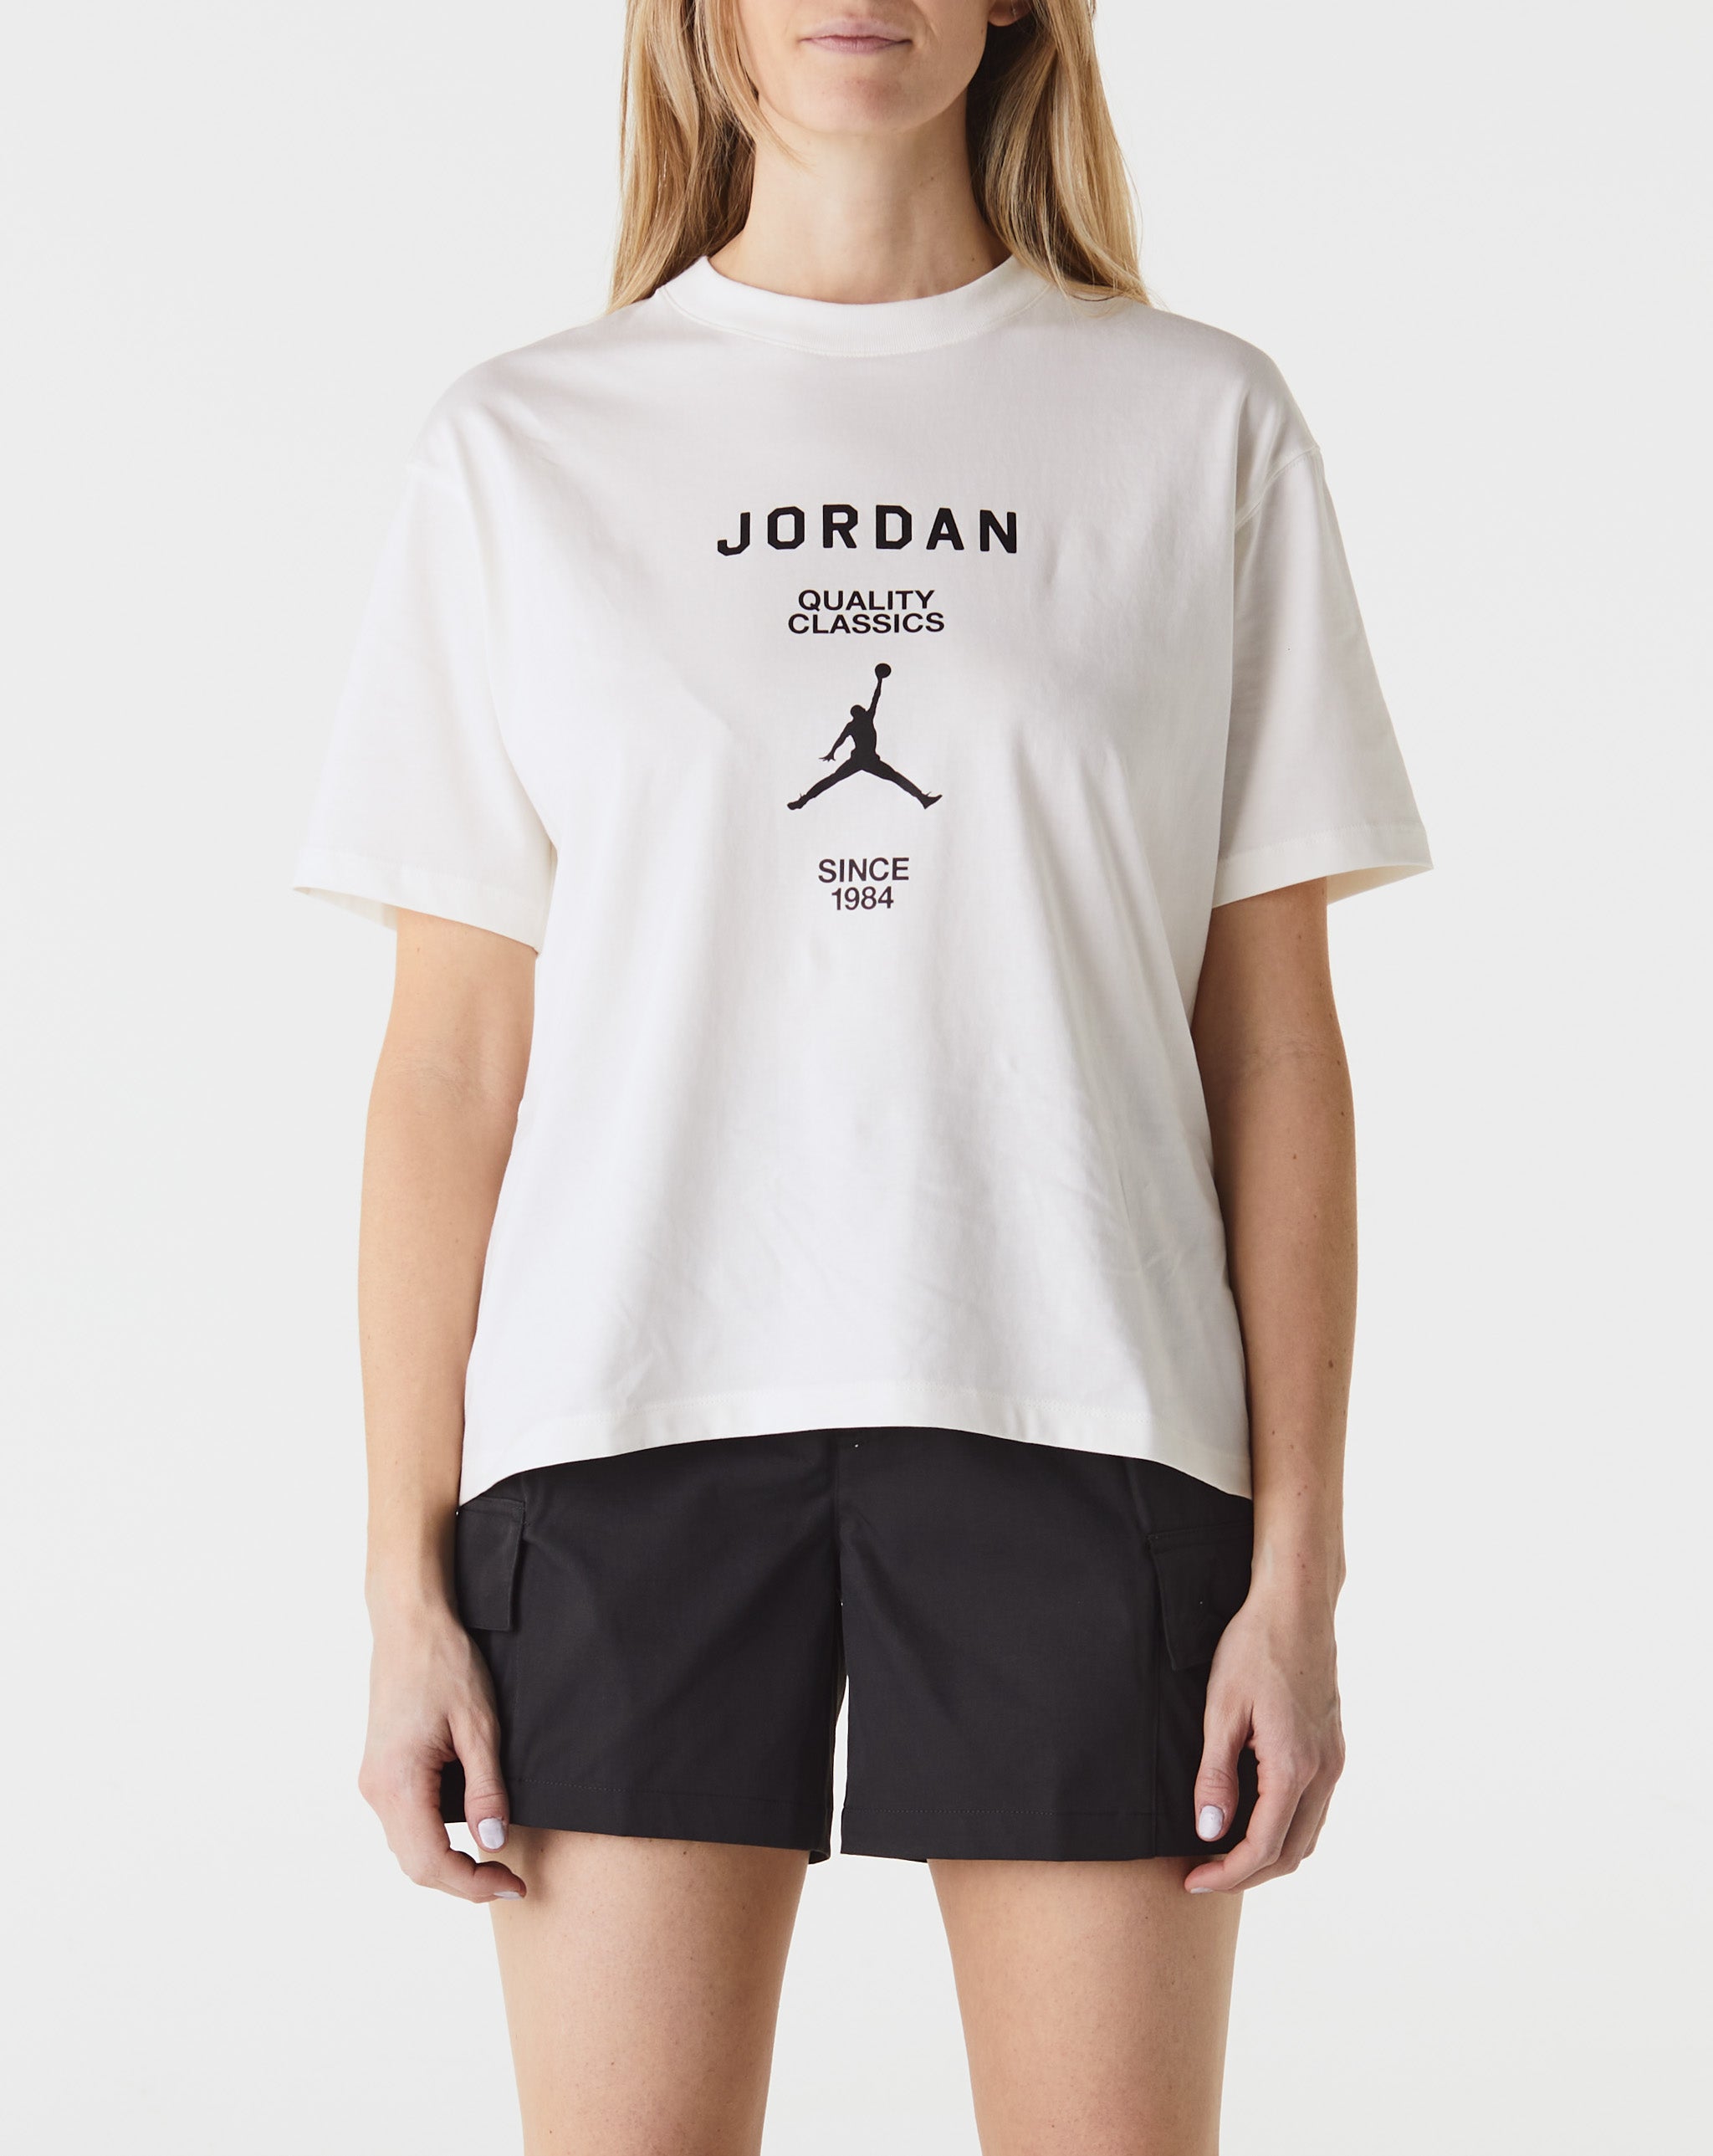 Air Jordan Women's Jordan Quality Classics T-Shirt  - Cheap Urlfreeze Jordan outlet